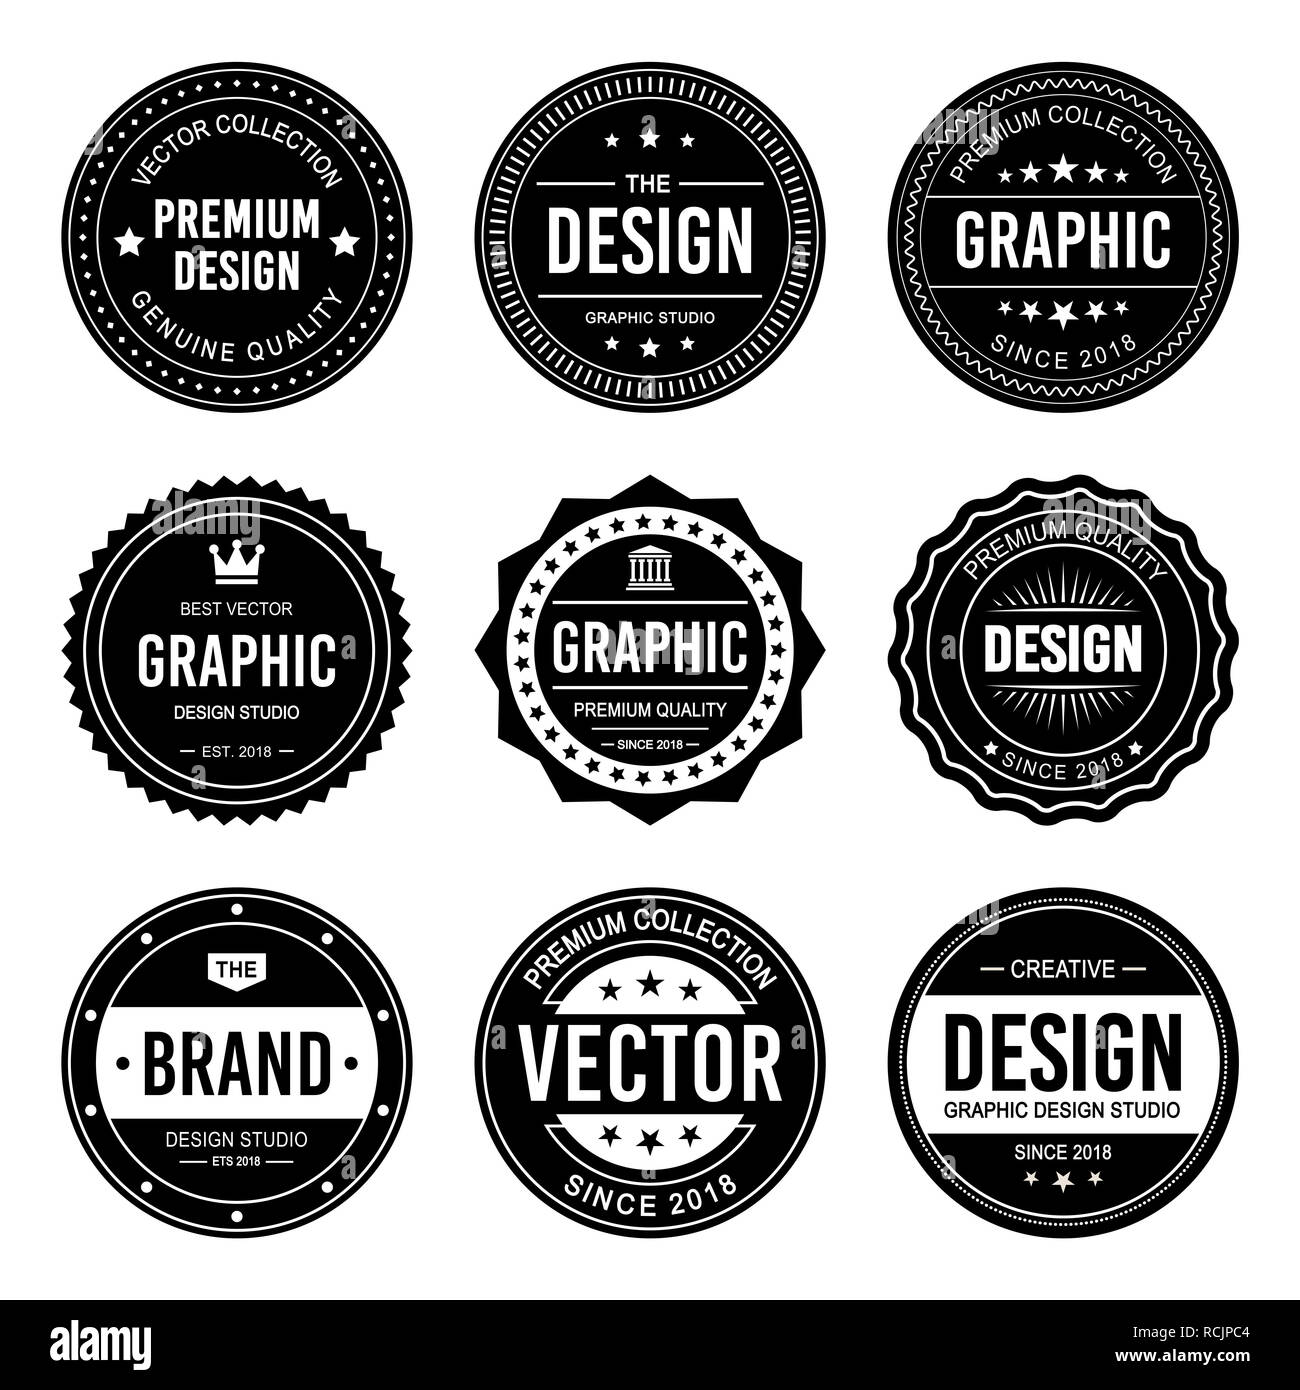 Vintage badge vector design Stock Photo - Alamy